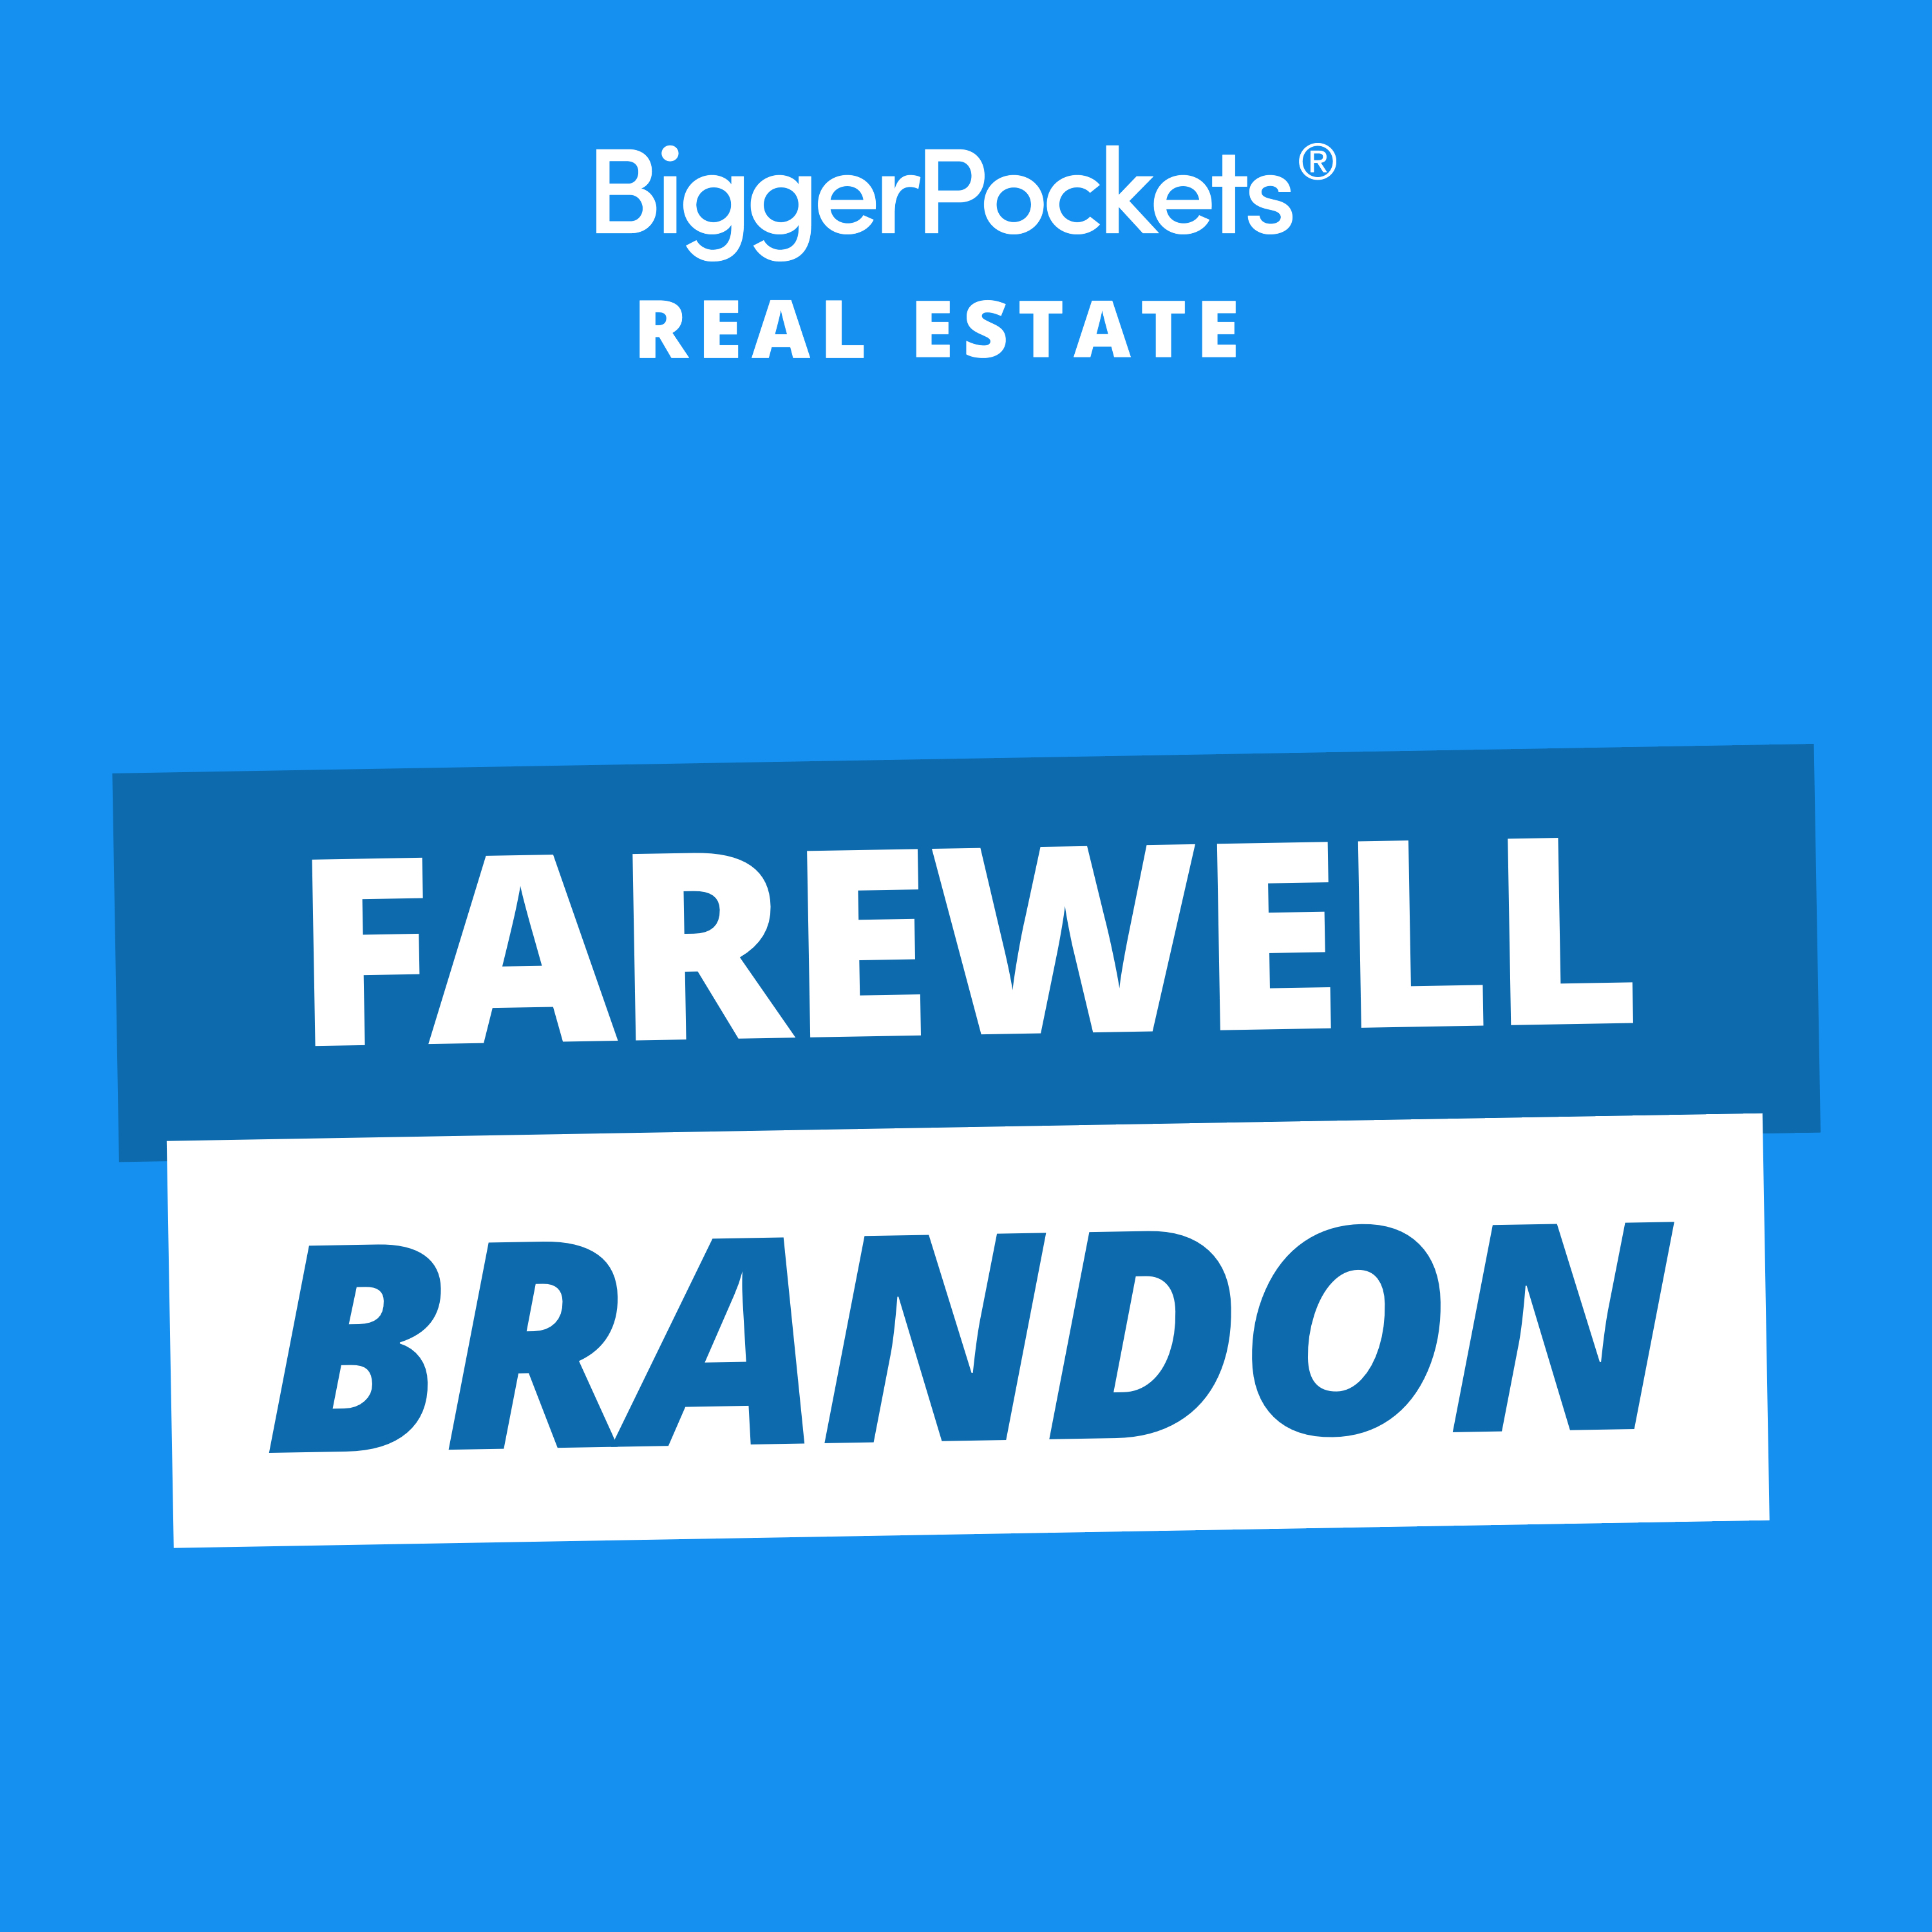 551: Brandon’s Final Episode: Life Beyond Real Estate, w/ David Greene and BiggerPockets Founder Joshua Dorkin